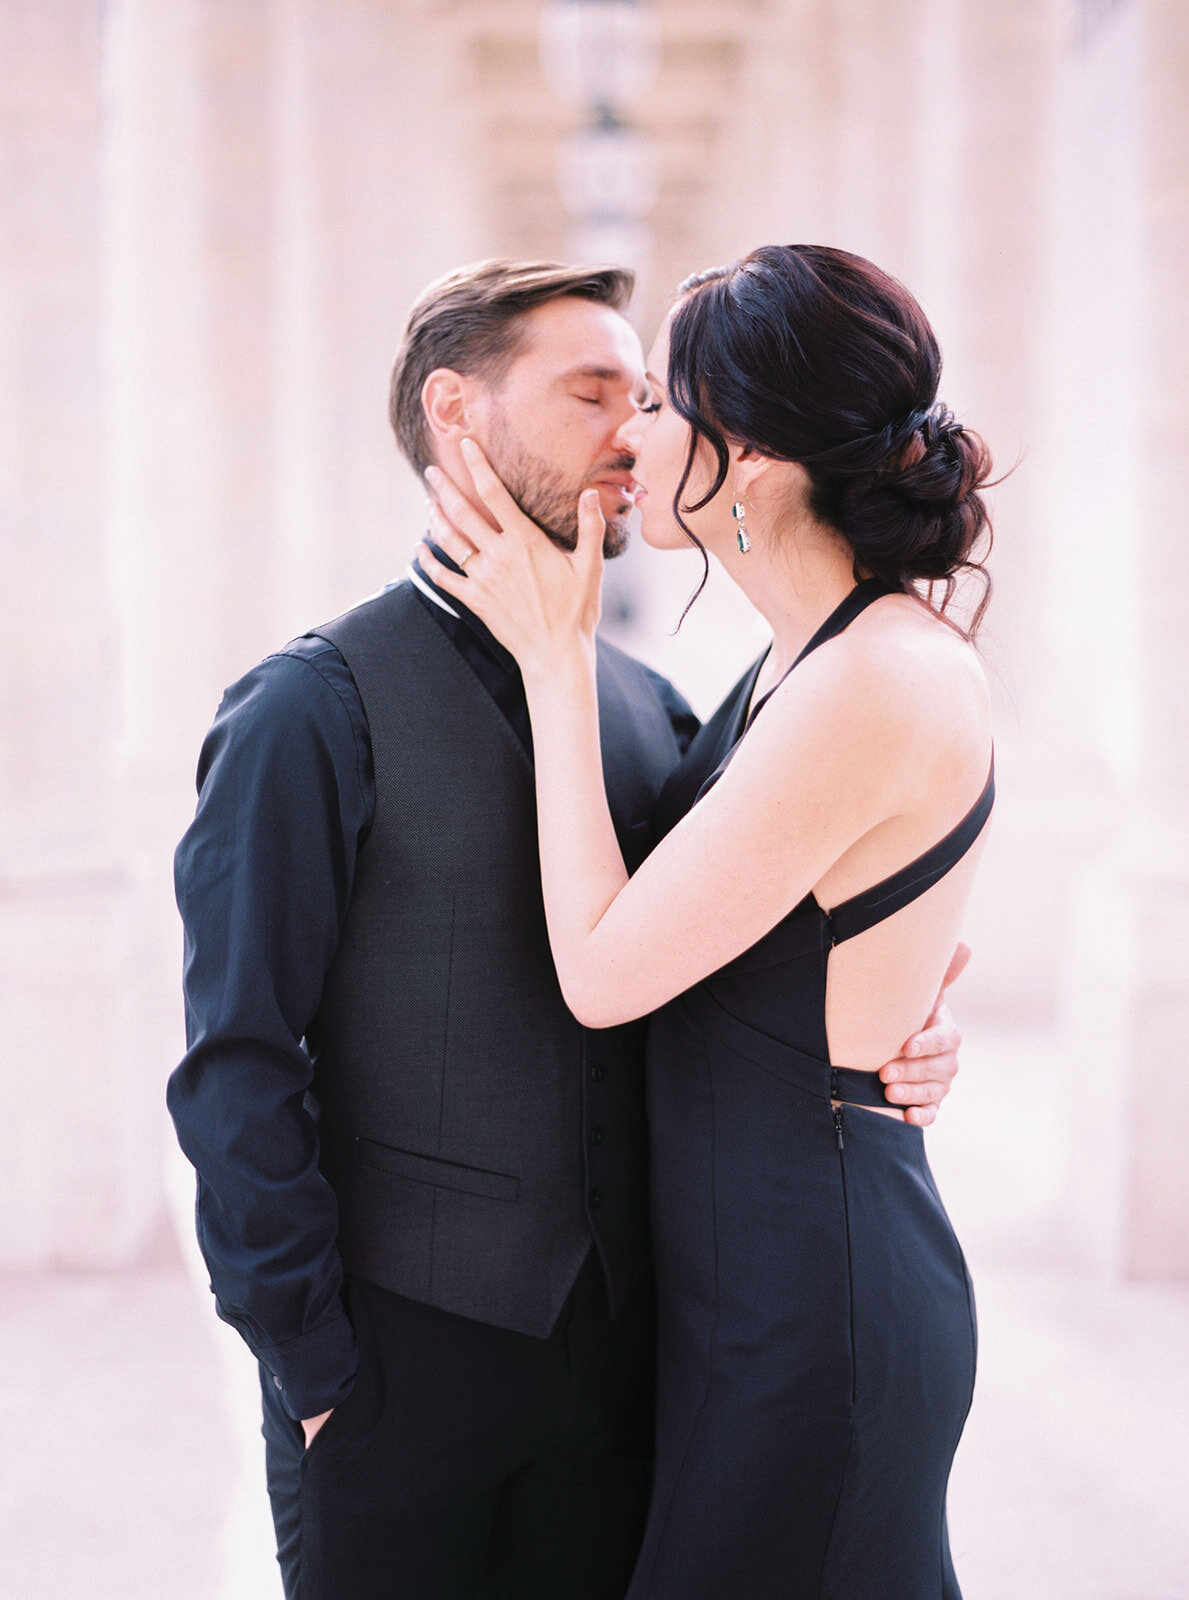 Couple's Engagement Photoshoot in Paris, France